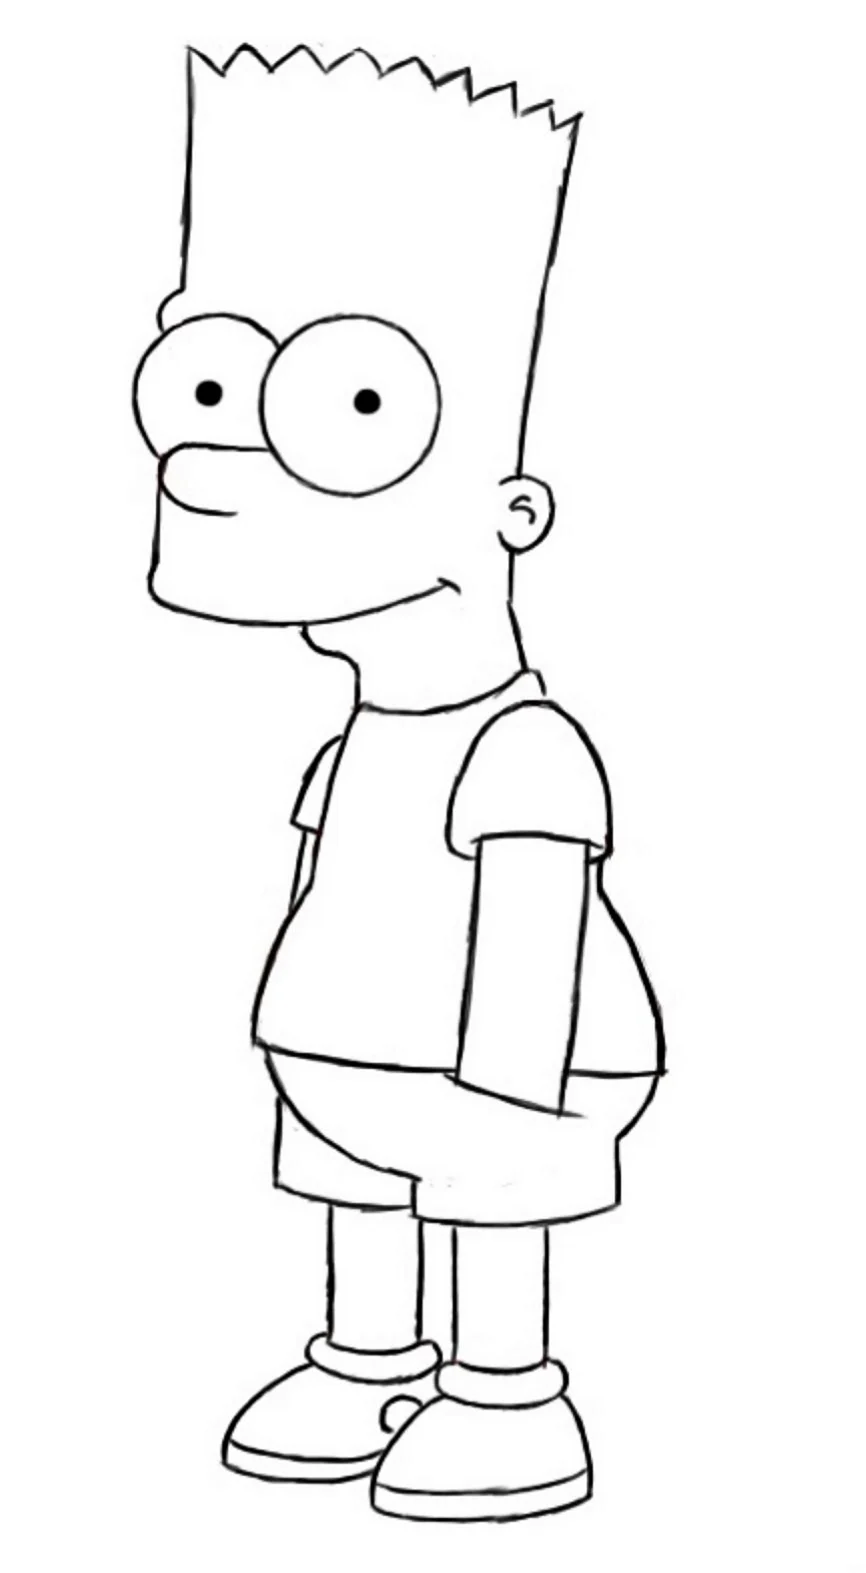 Барт симпсон для срисовки. Для срисовки